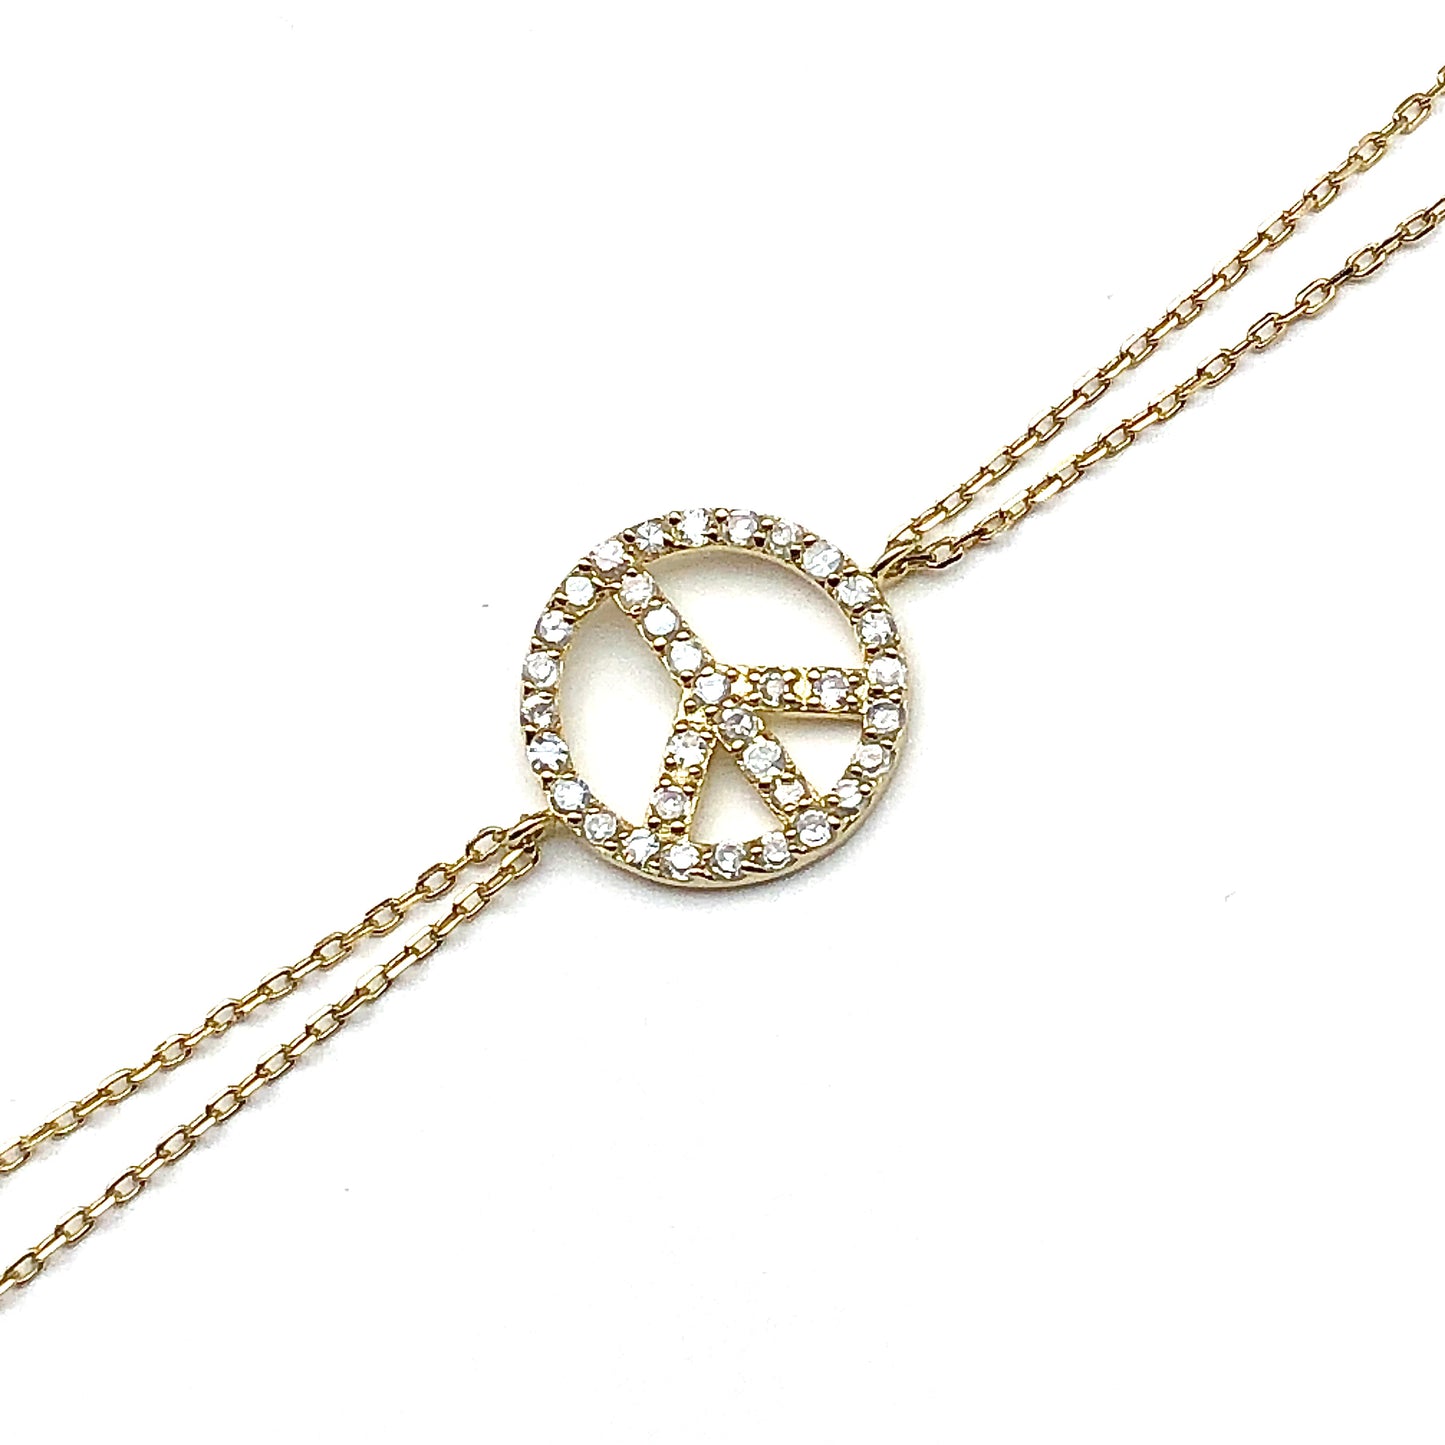 Blingschlingers Jewelry - Bracelet | Womens Sterling Silver Delicate Two Strand Gold Bracelet | Peace Symbol Jewelry